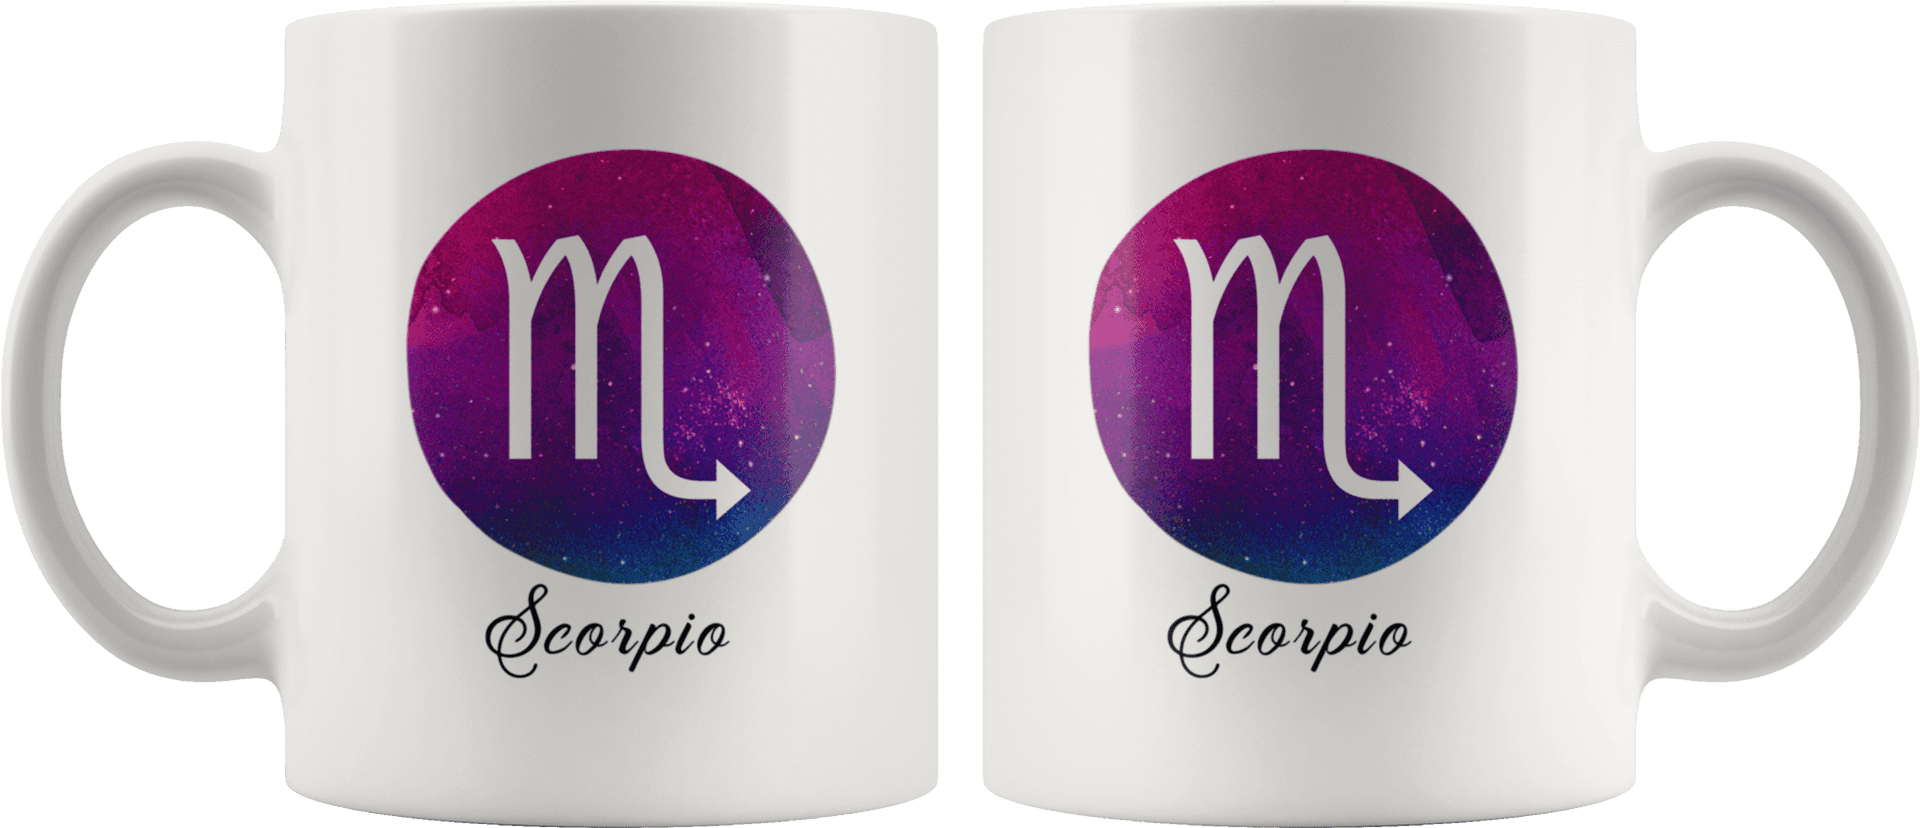 Scorpio Zodiac Sign Mugs PNG